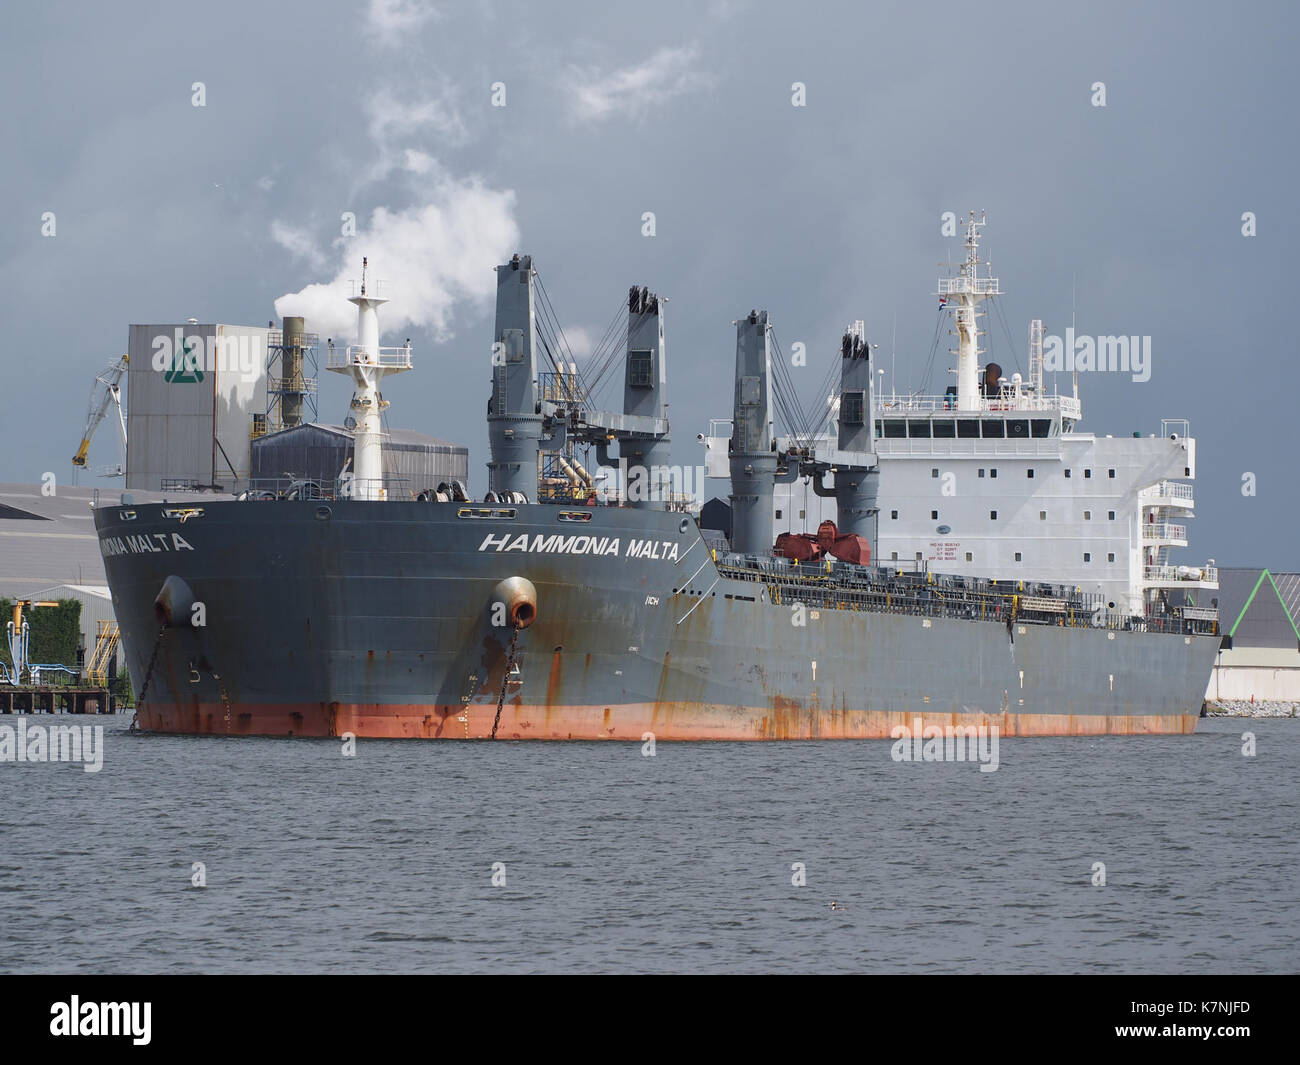 Hammonia Malta (ship, 2010) IMO 9515747 Port of Amsterdam pic3 Stock Photo